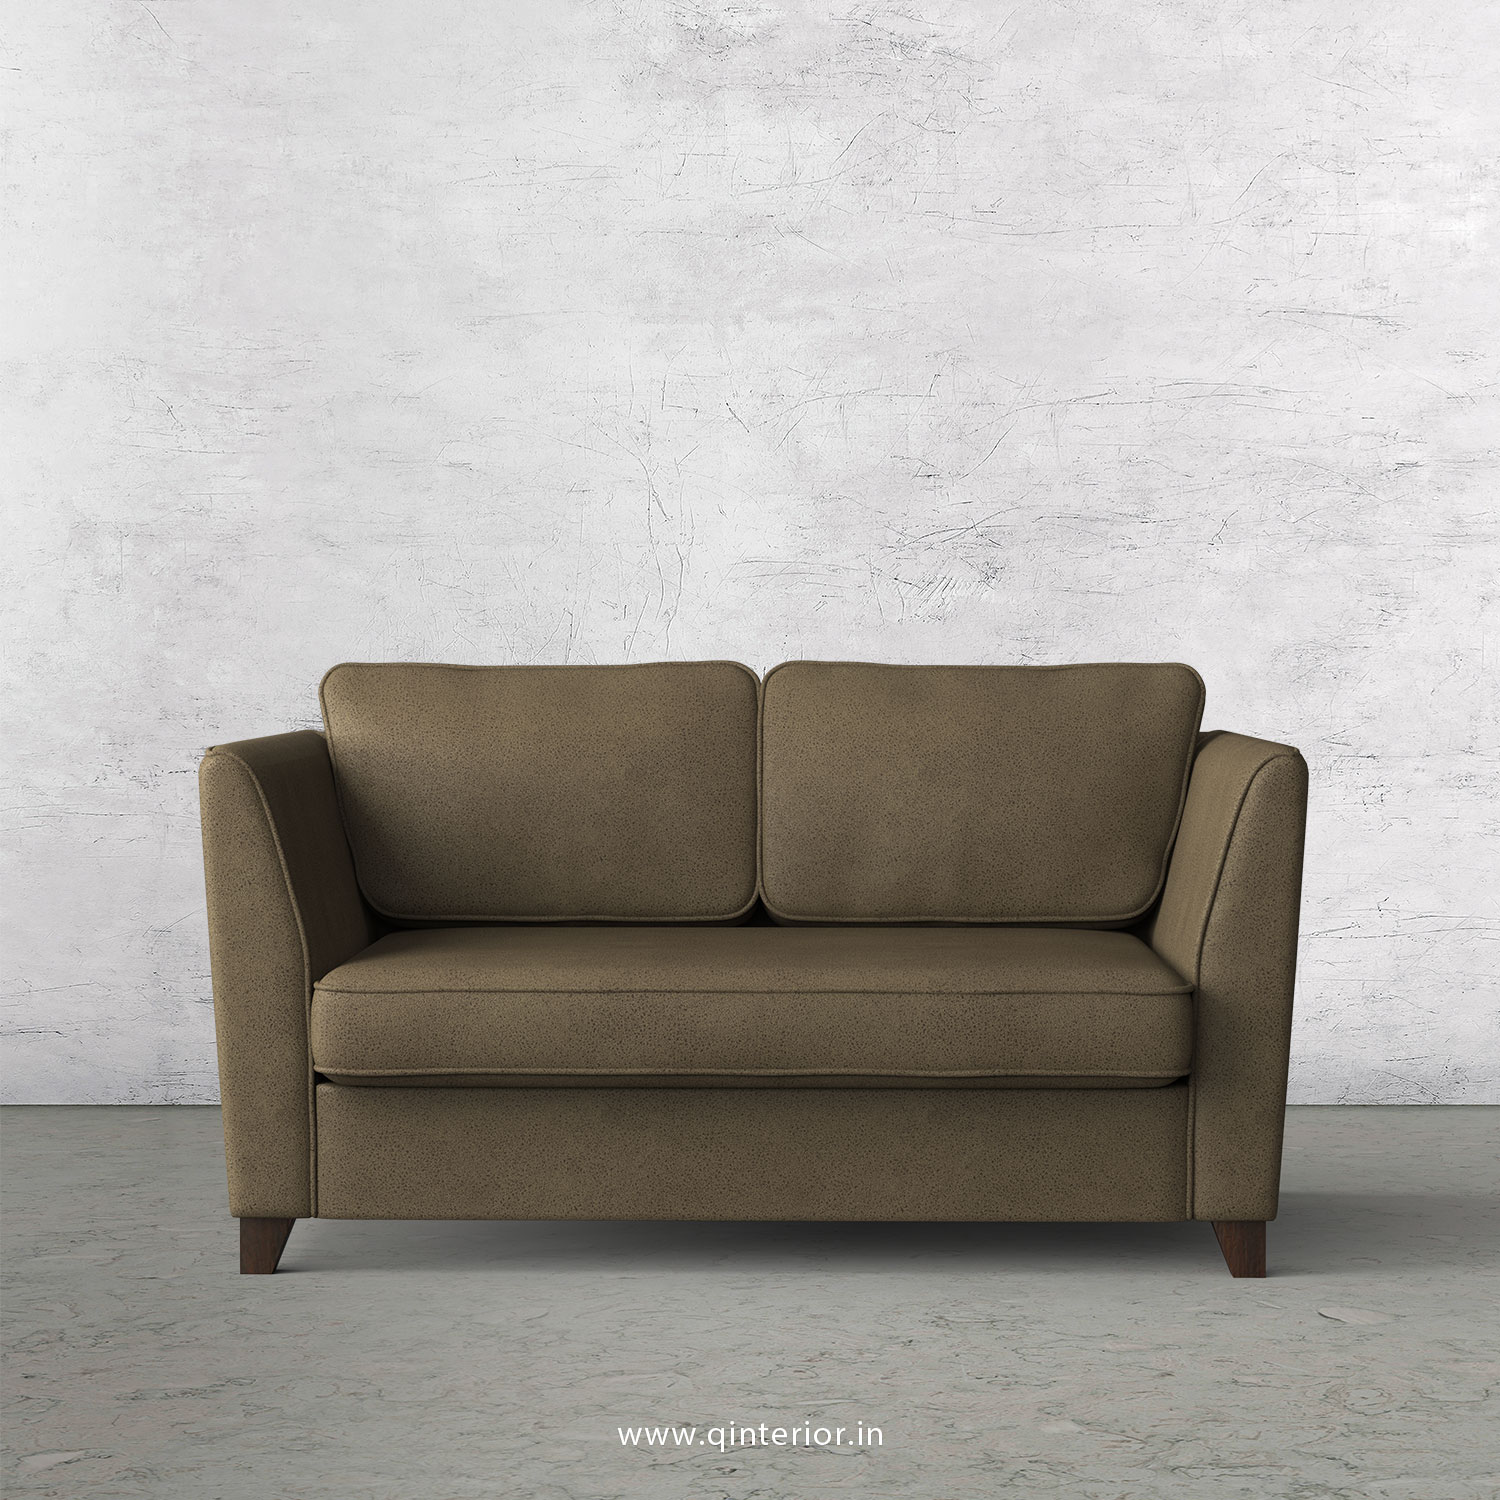 Kingstone 2 Seater Sofa in Fab Leather Fabric - SFA004 FL06